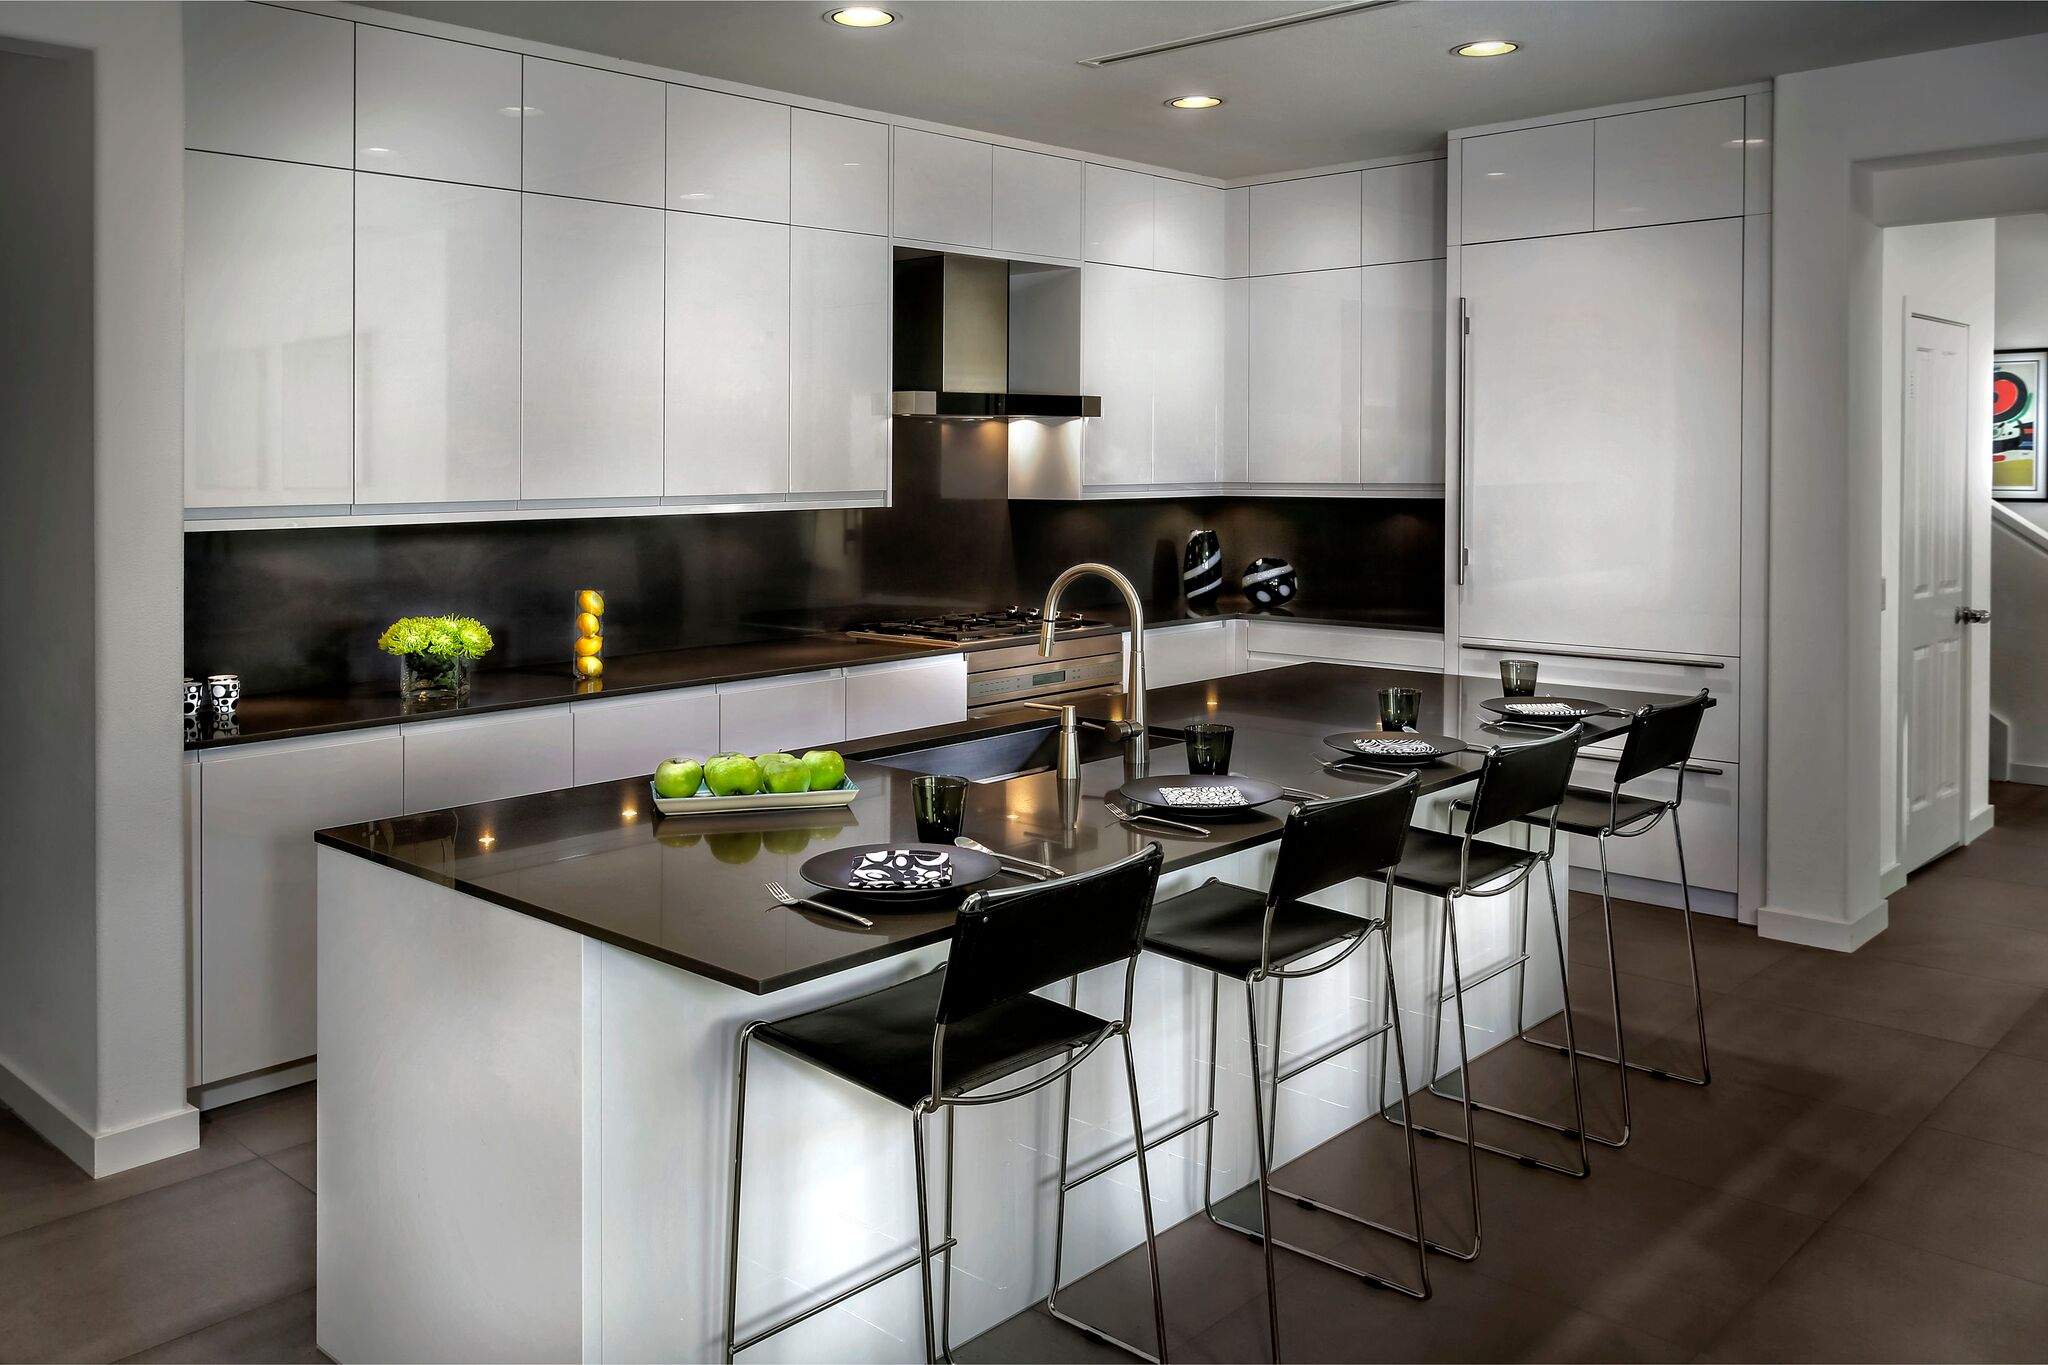 Laguna Beach Contemporary kitchen in high gloss lacquer